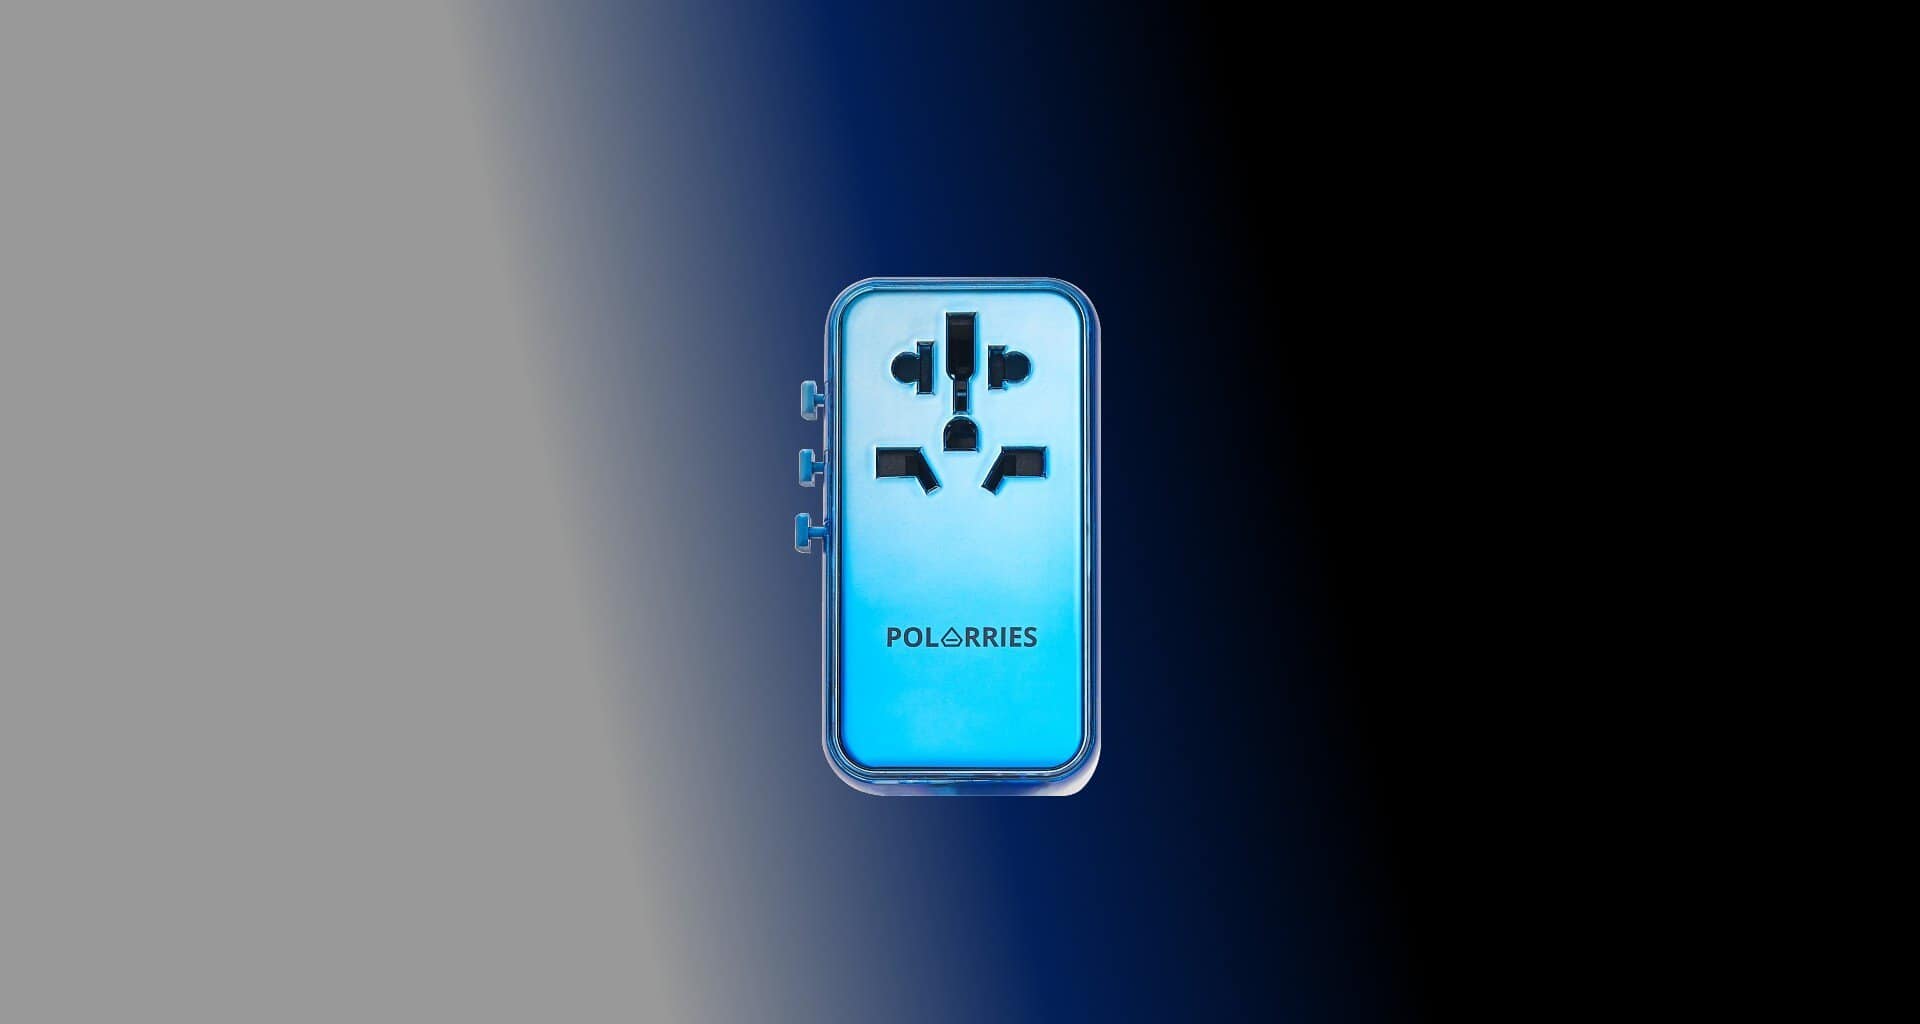 Review polarries e-cube 100 review: carregador-tomada universal polarries e-cube 100